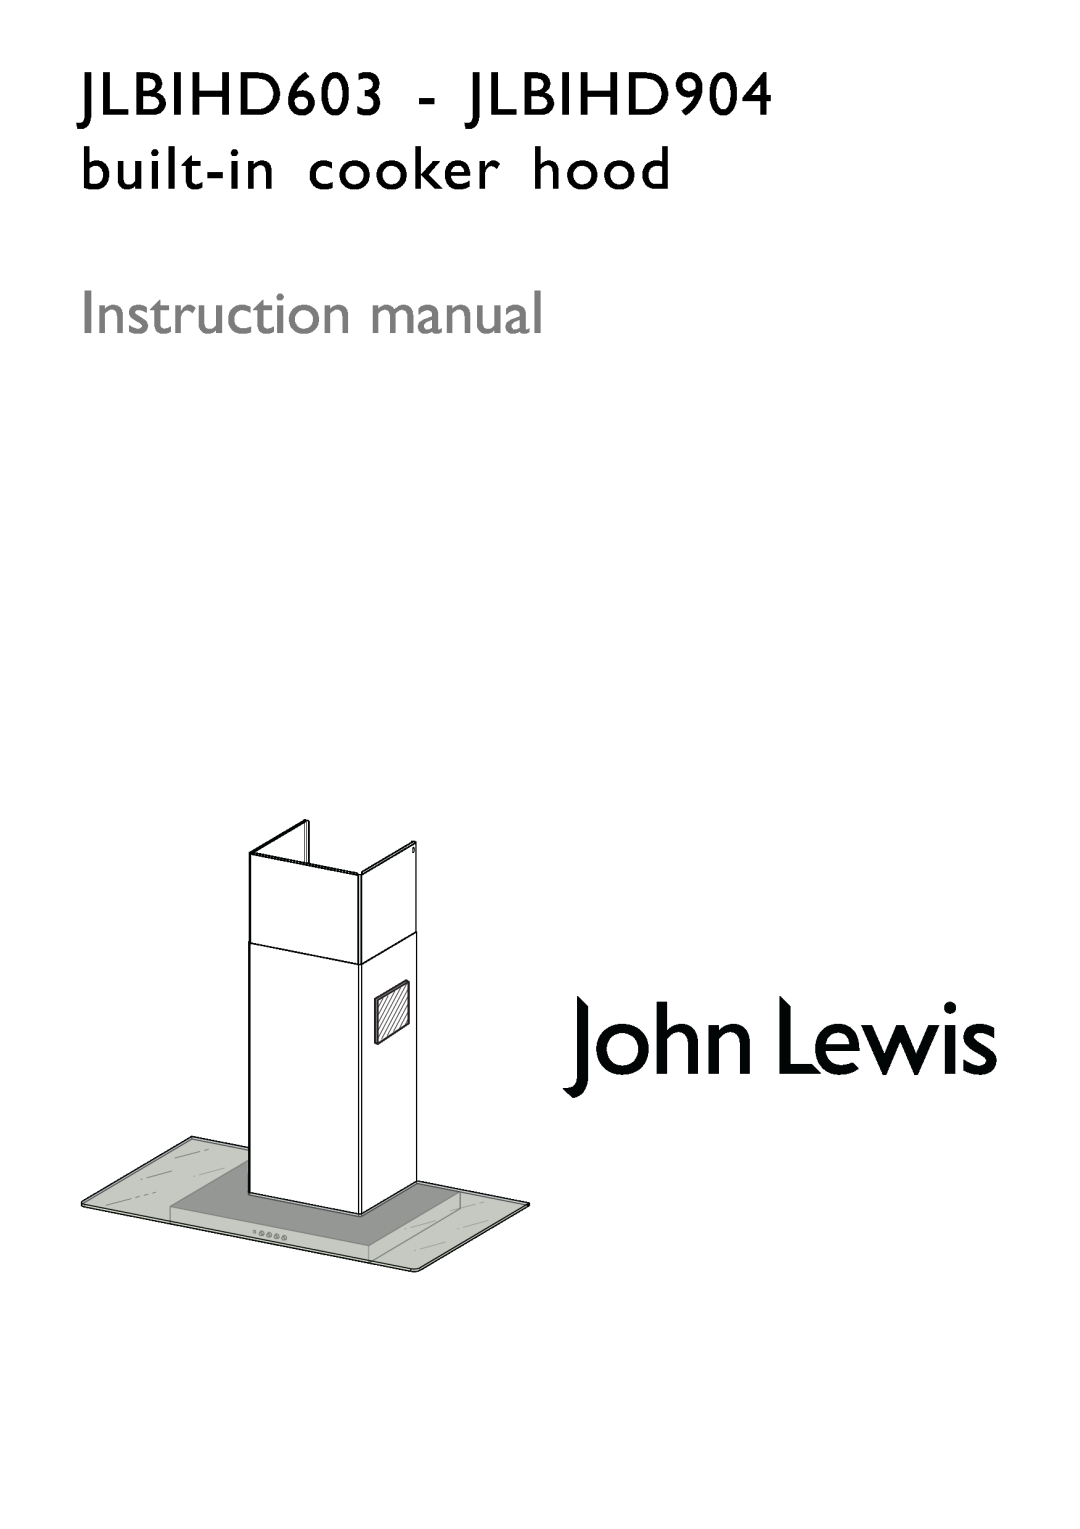 John Lewis instruction manual JLBIHD603 - JLBIHD904 built-incooker hood 